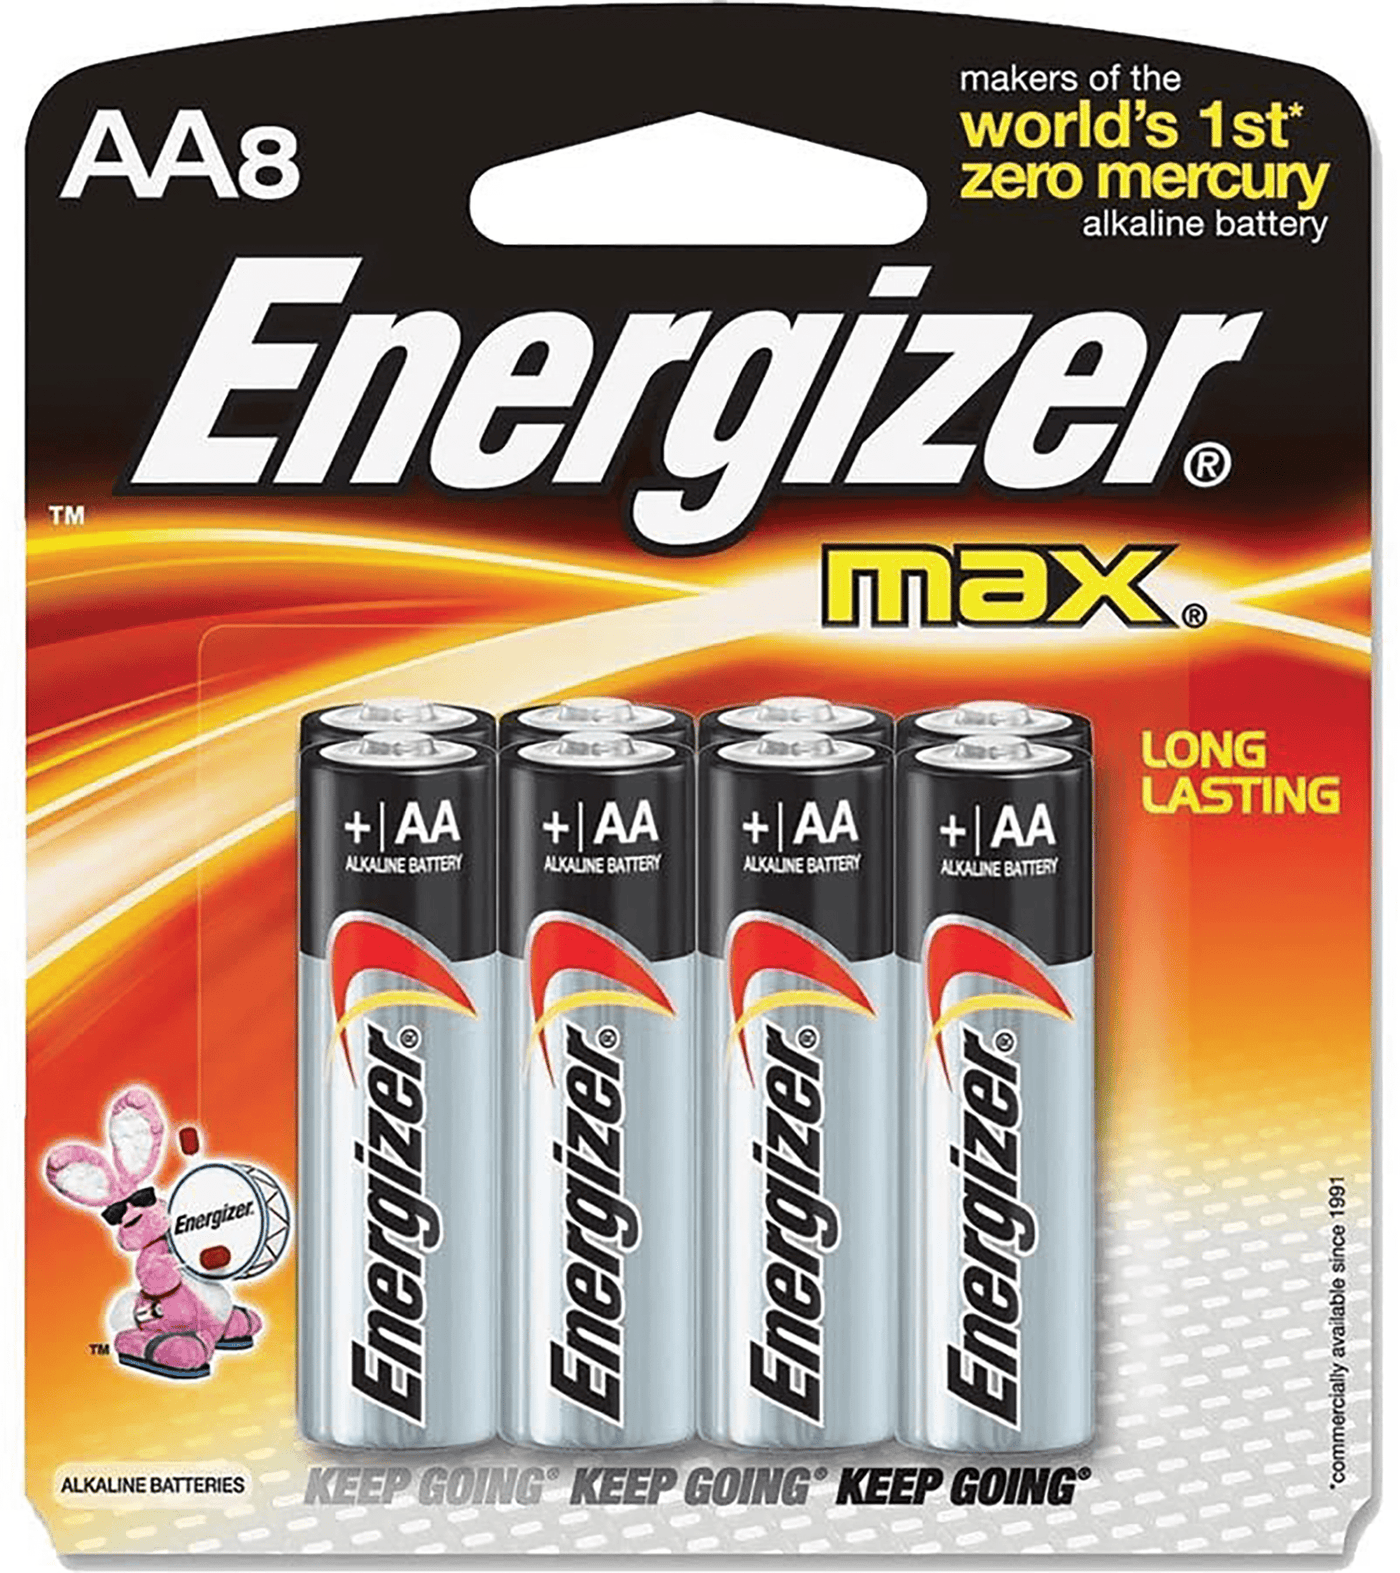 Energizer Energizer Max Batteries Aa - 8-pack Batteries